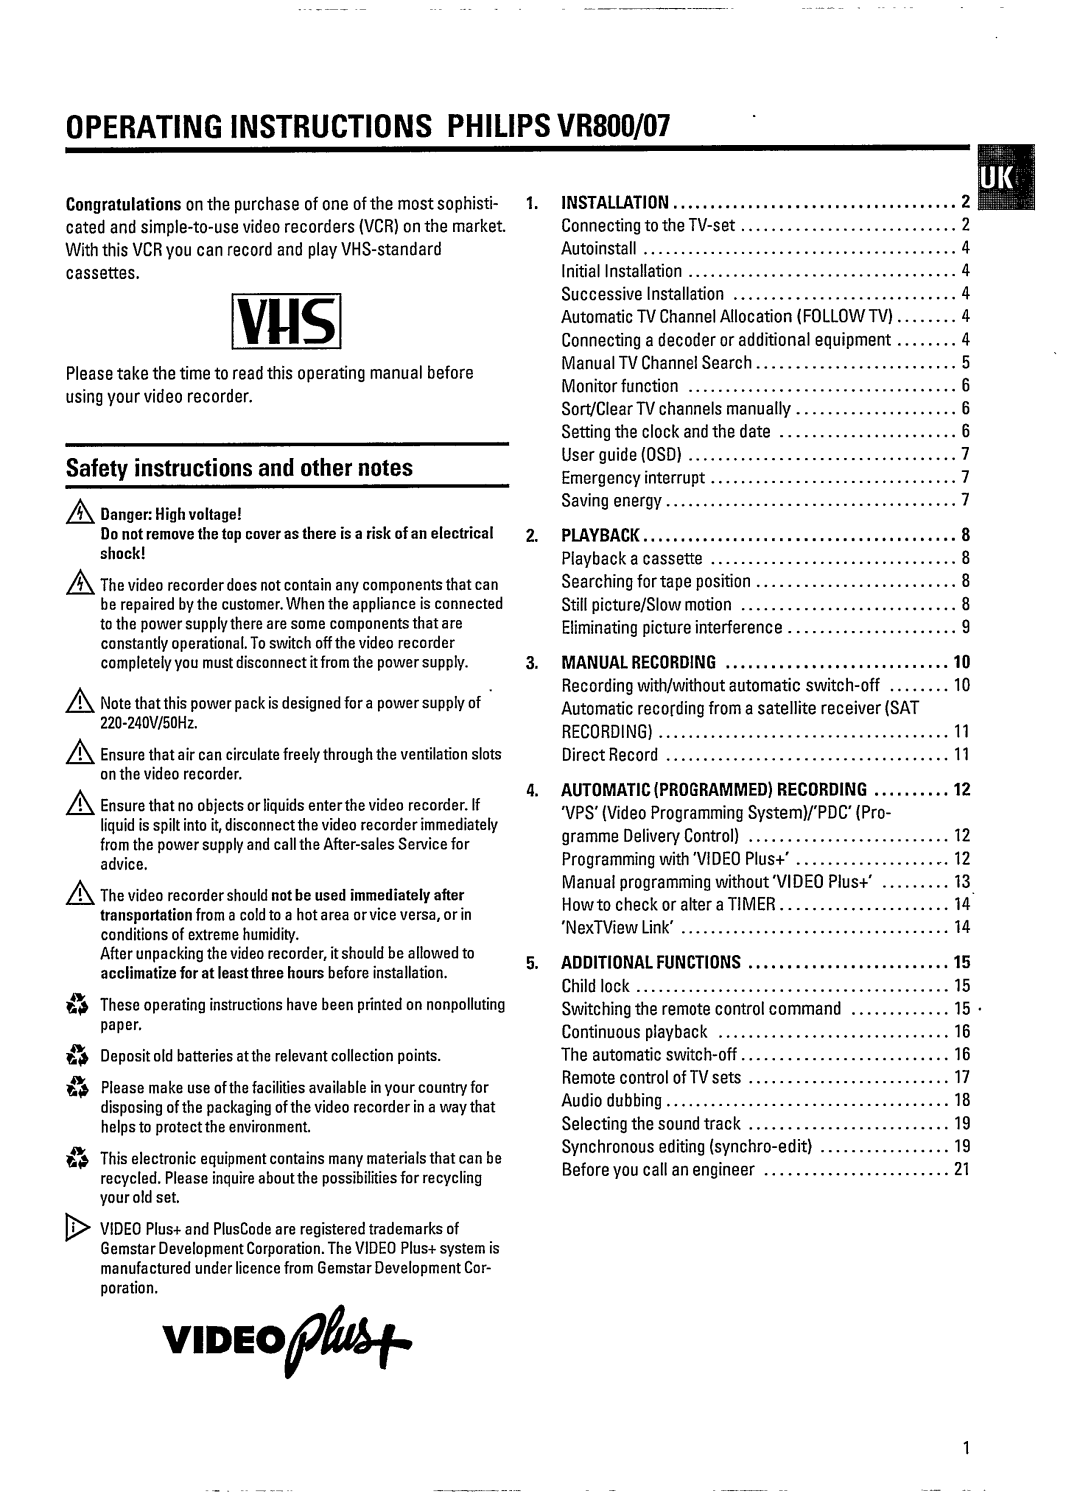 Philips VR800 manual 